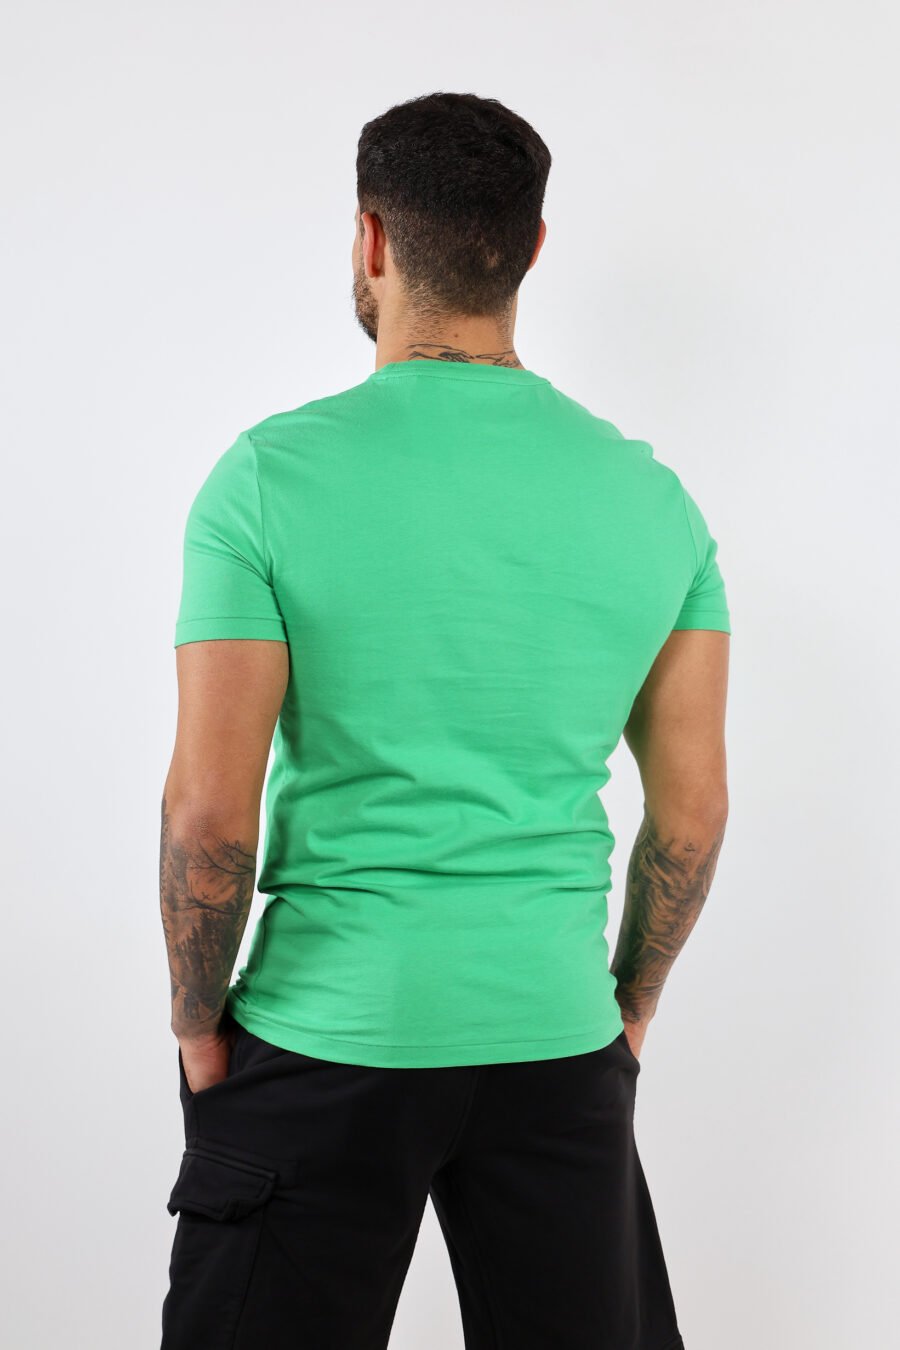 T-shirt verde e amarela com mini-logotipo "polo" - BLS Fashion 305